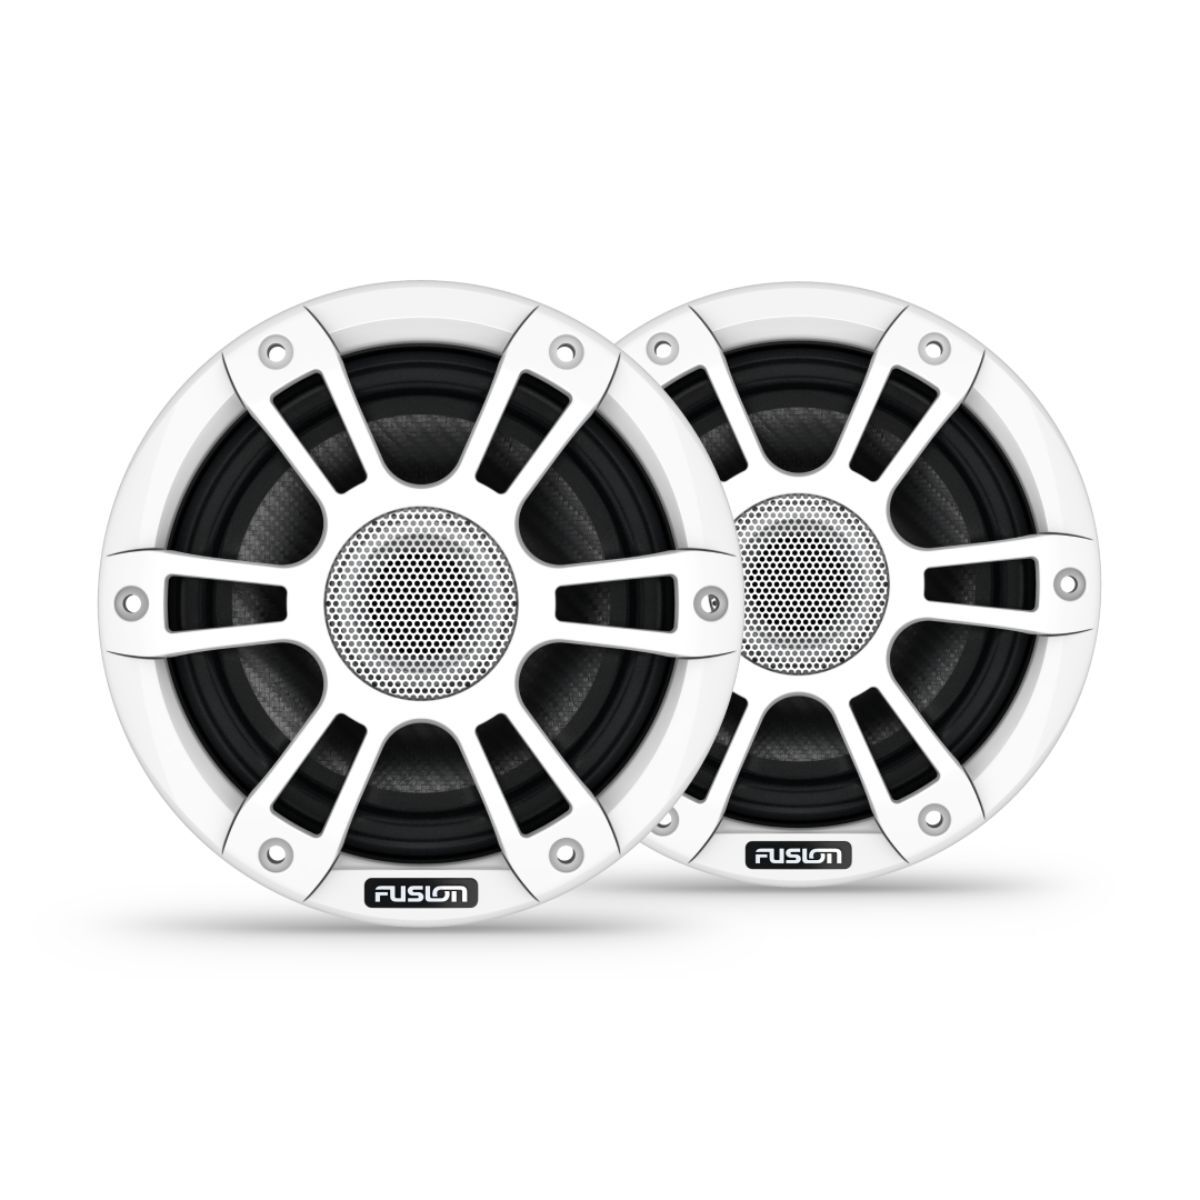 Fusion Signature Series 3i Marine Speakers, 6.5" 230-watt Coaxial Sports White Marine Speakers (Pair)